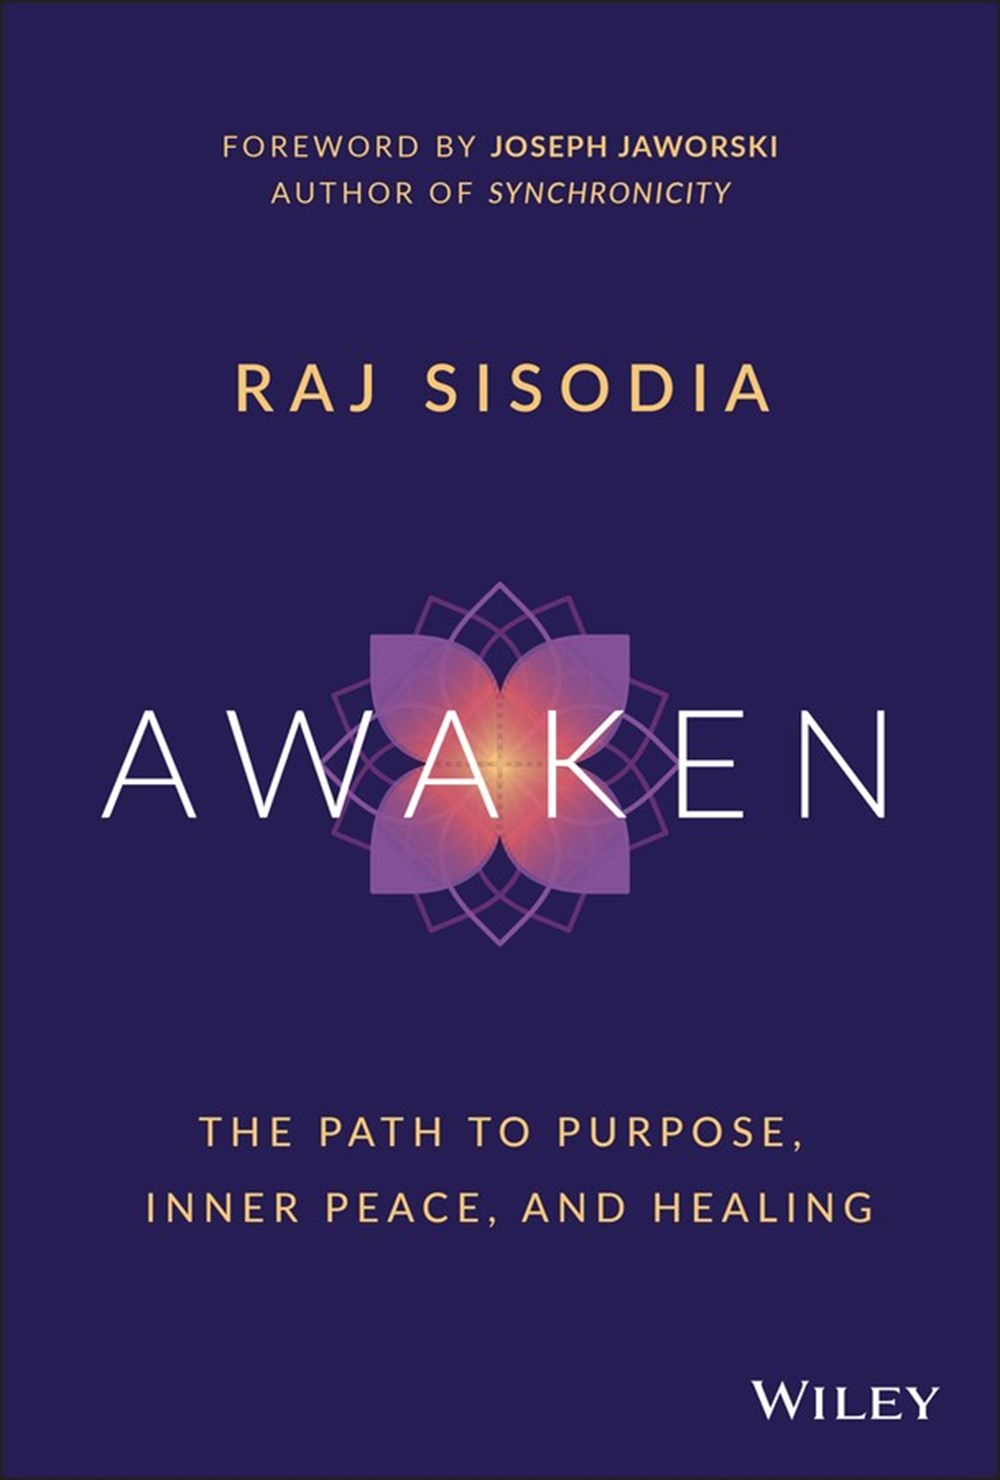 Awaken: The Path to Purpose, Inner Peace, and Healing